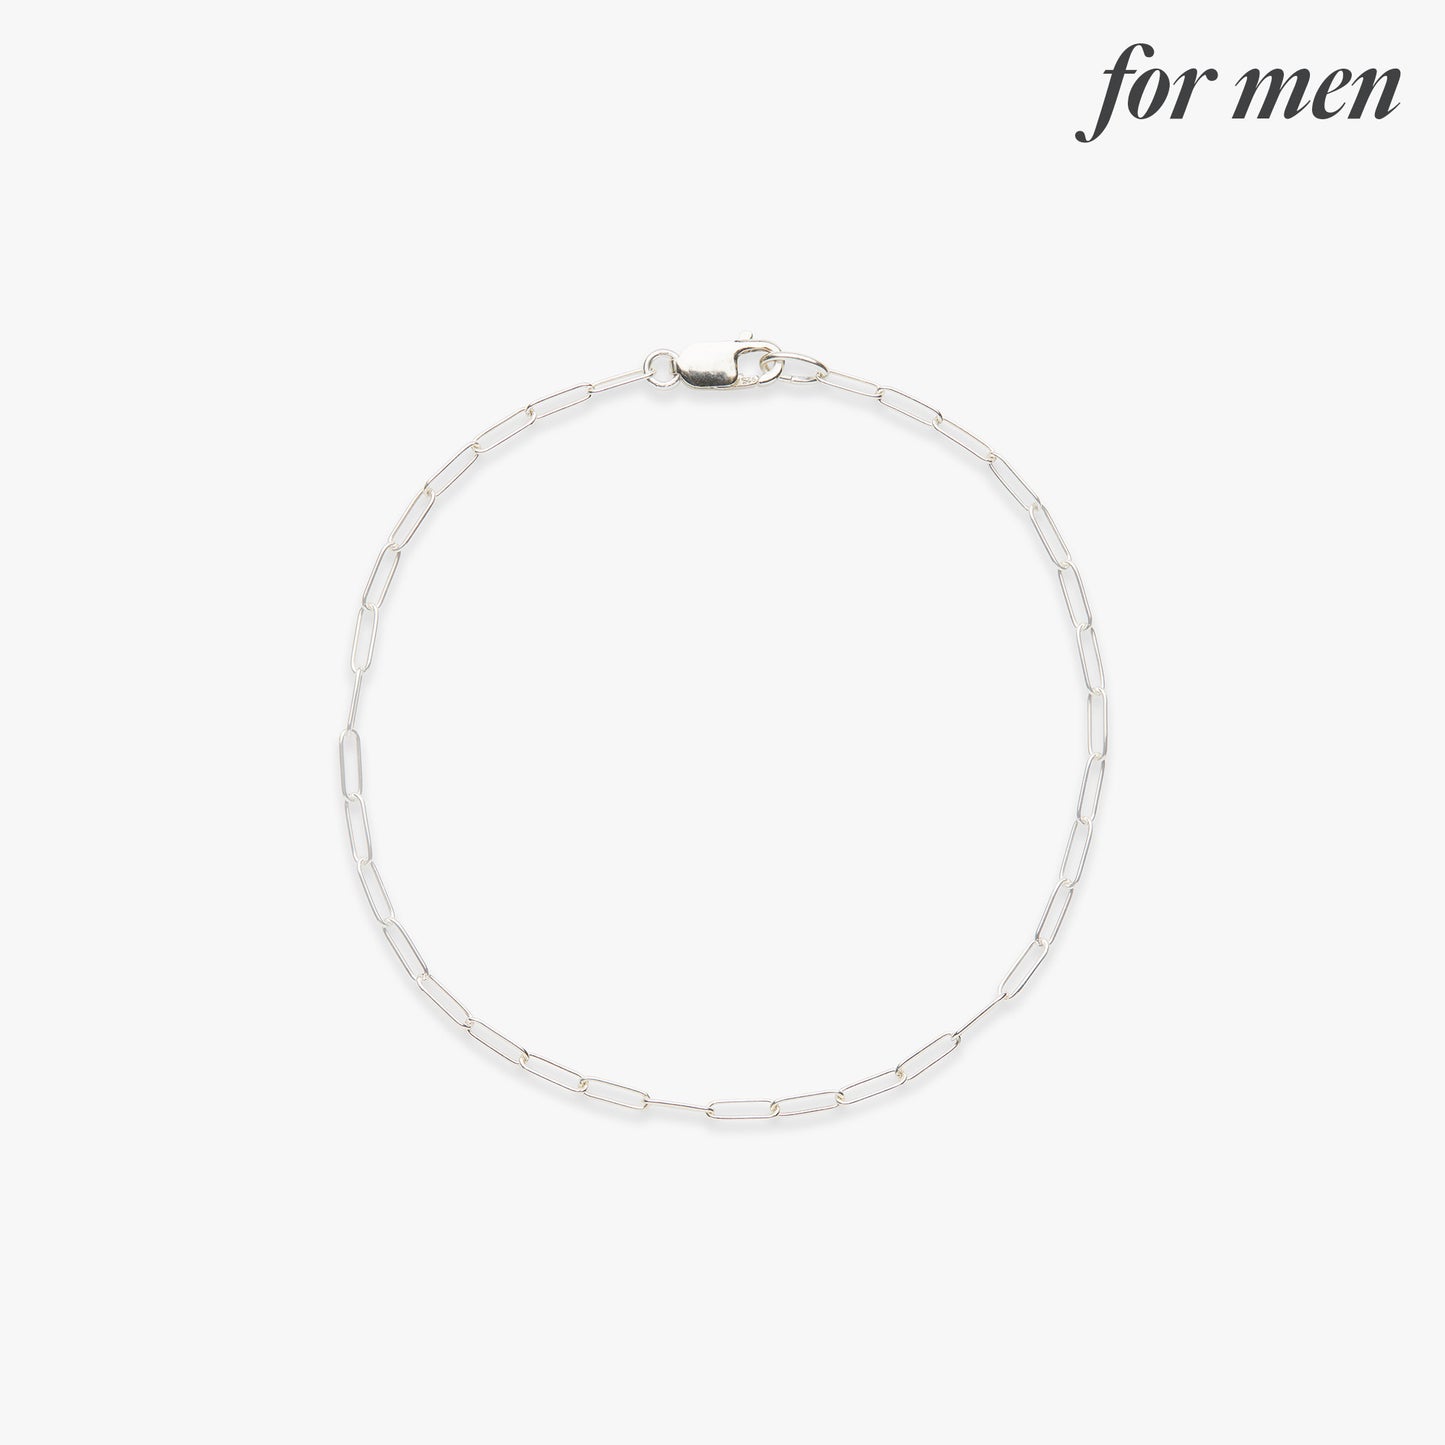 Paperclip chain bracelet silver for men